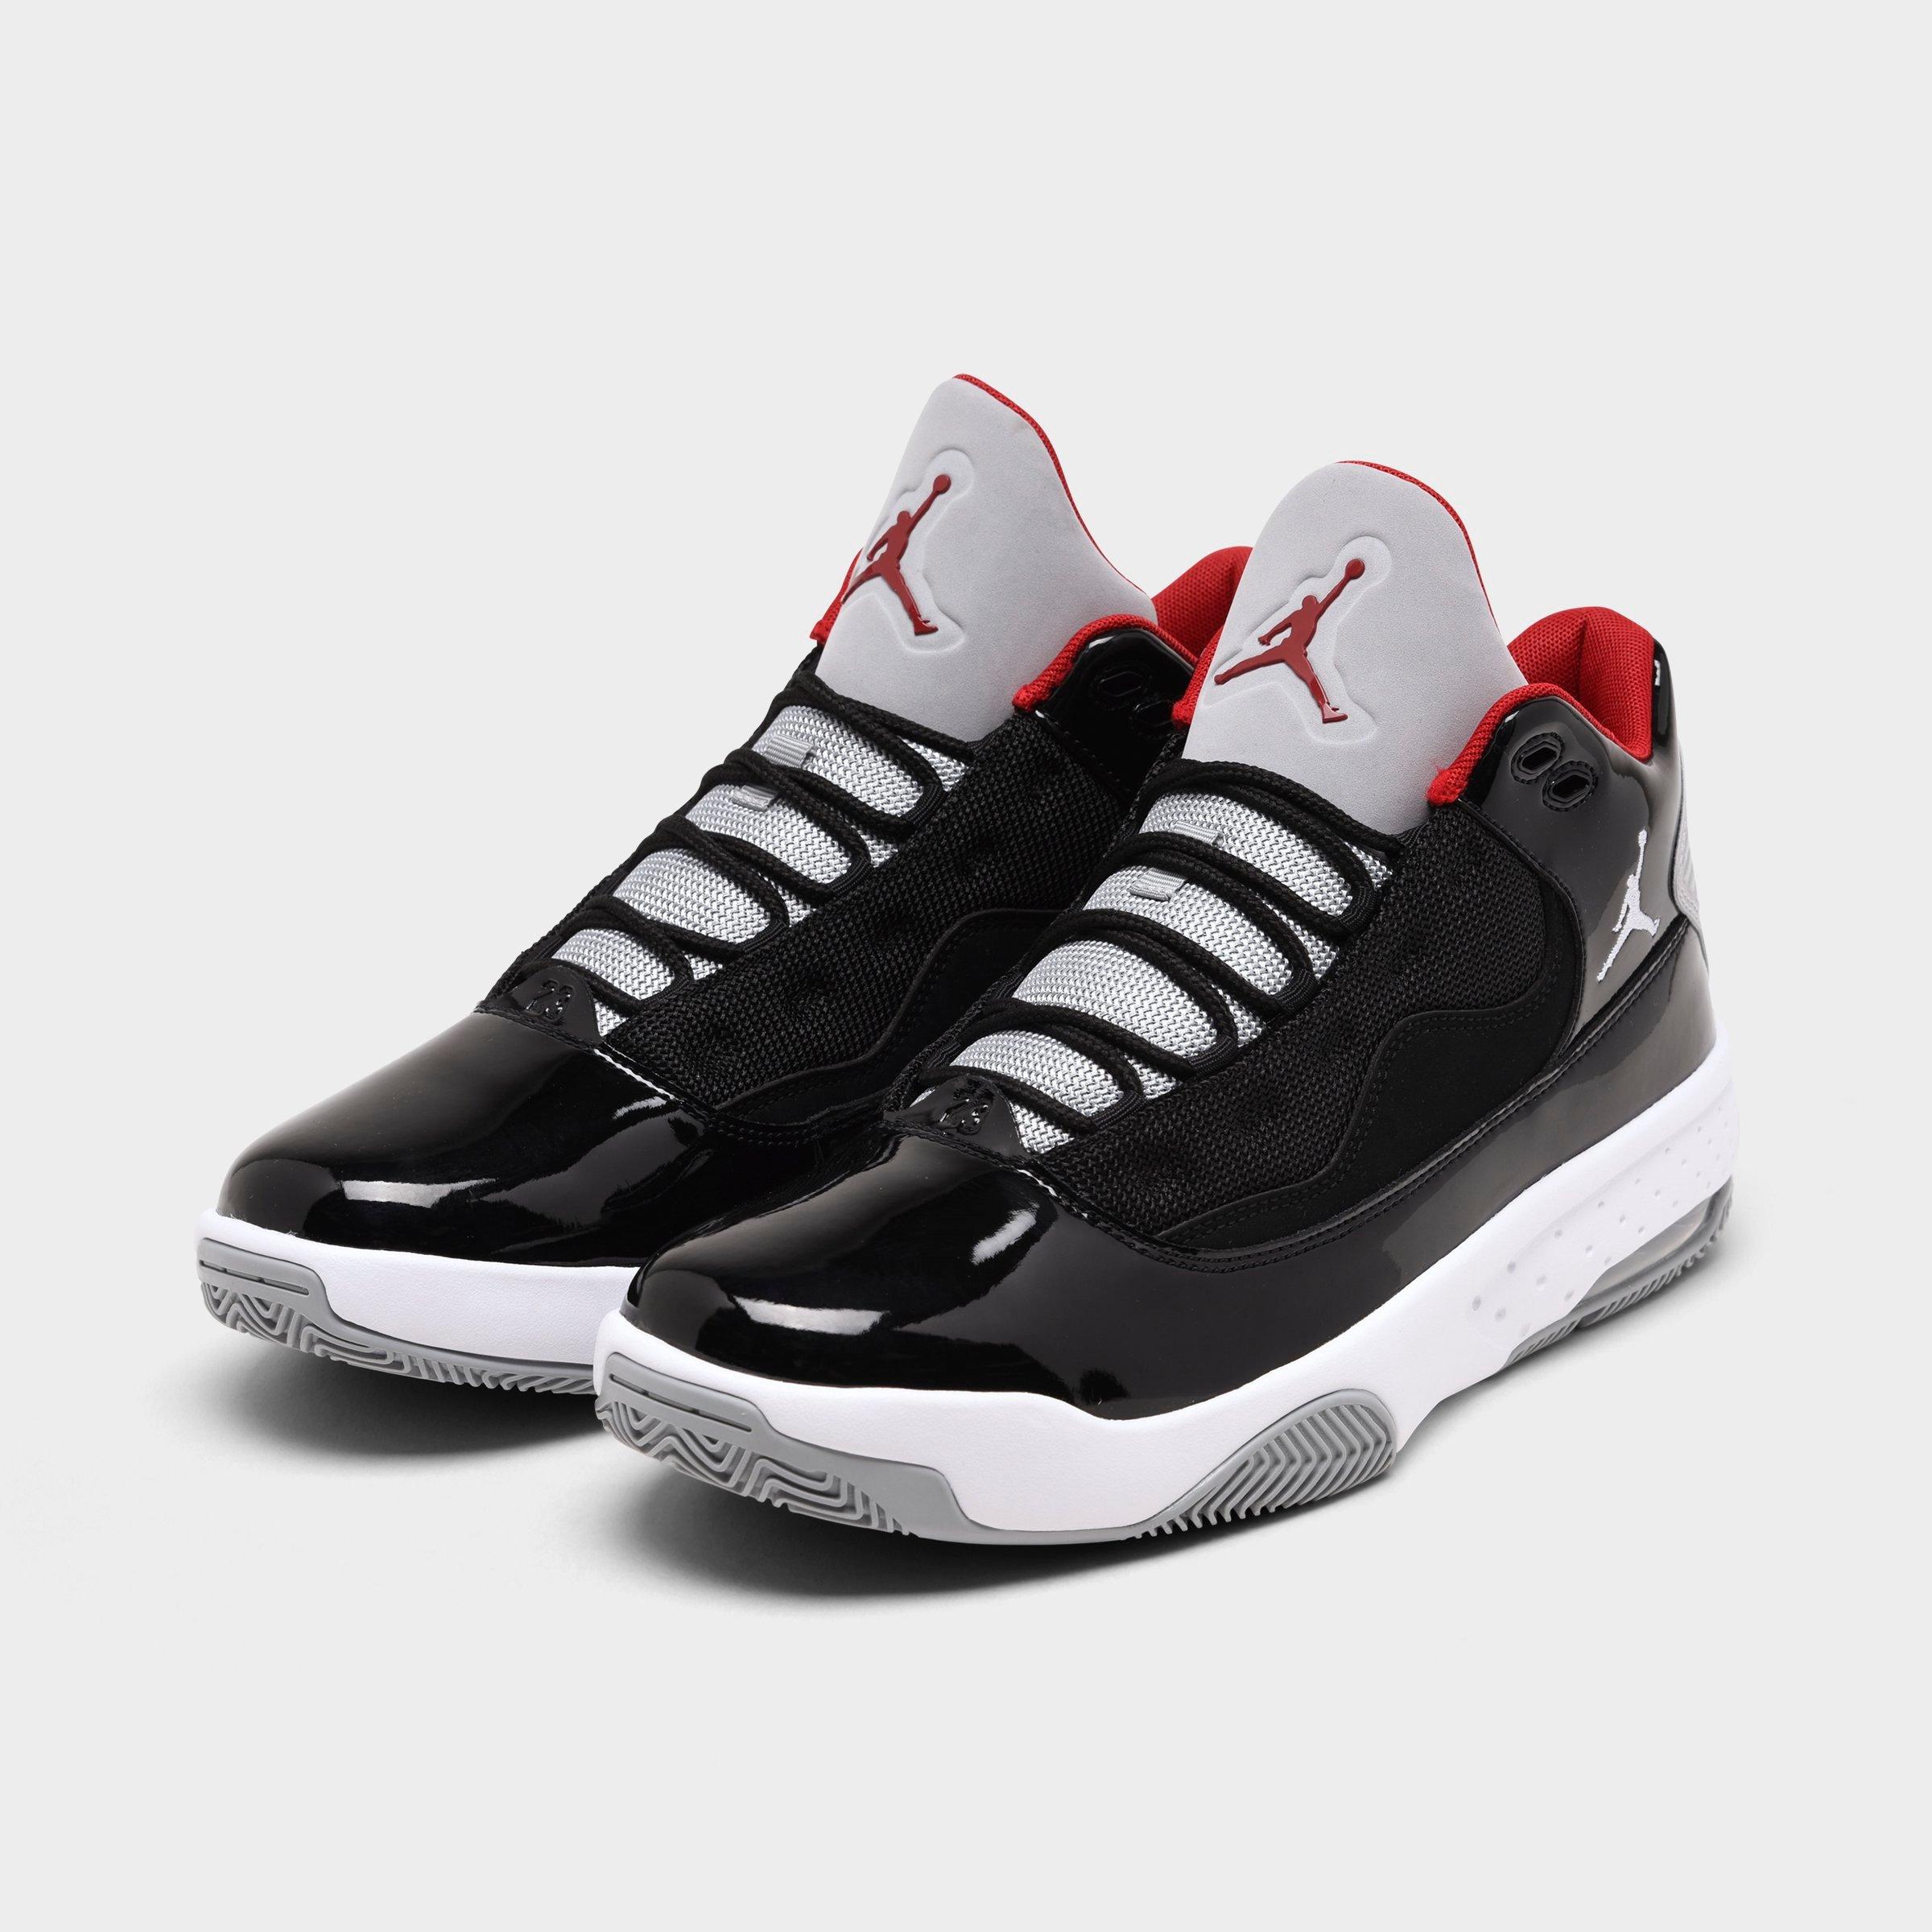 Jordan Max Aura 2 Basketball Shoes| JD 